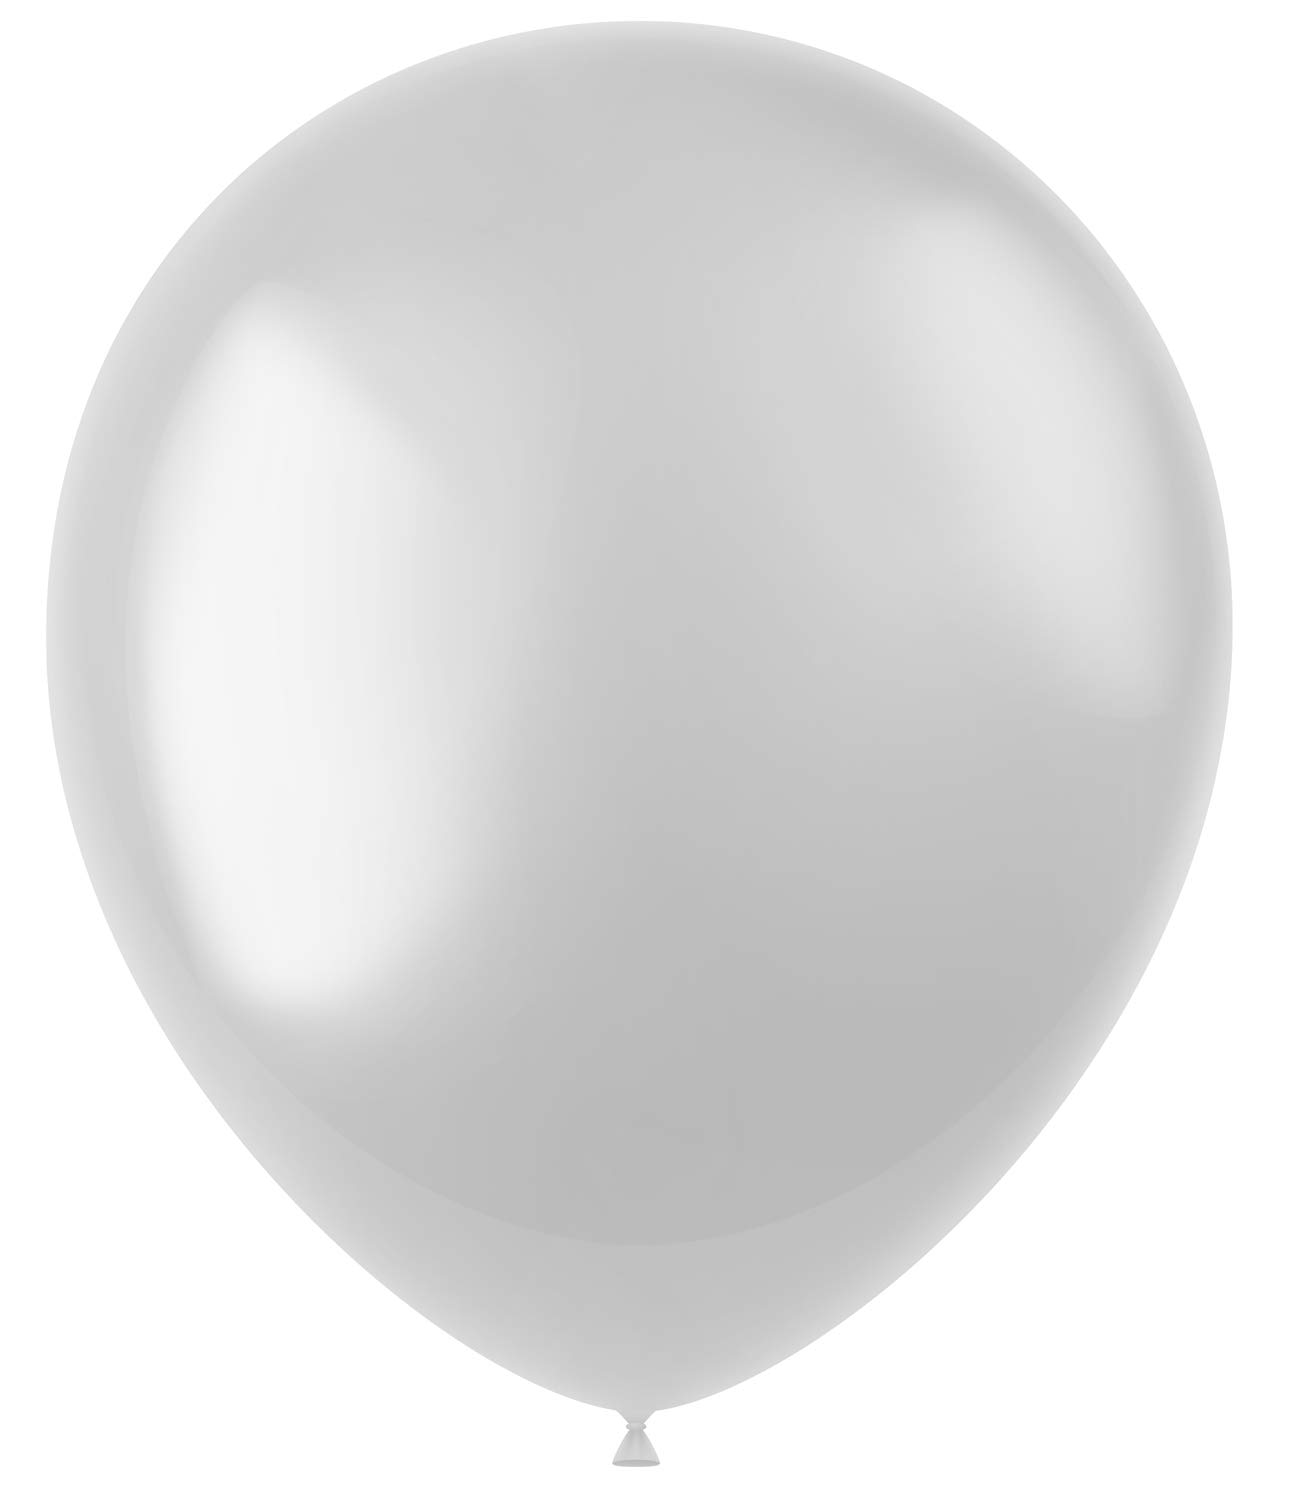 Folat 19760 - Latex Luftballons Oval - weiß glänzend - 33cm - 100 Stk.